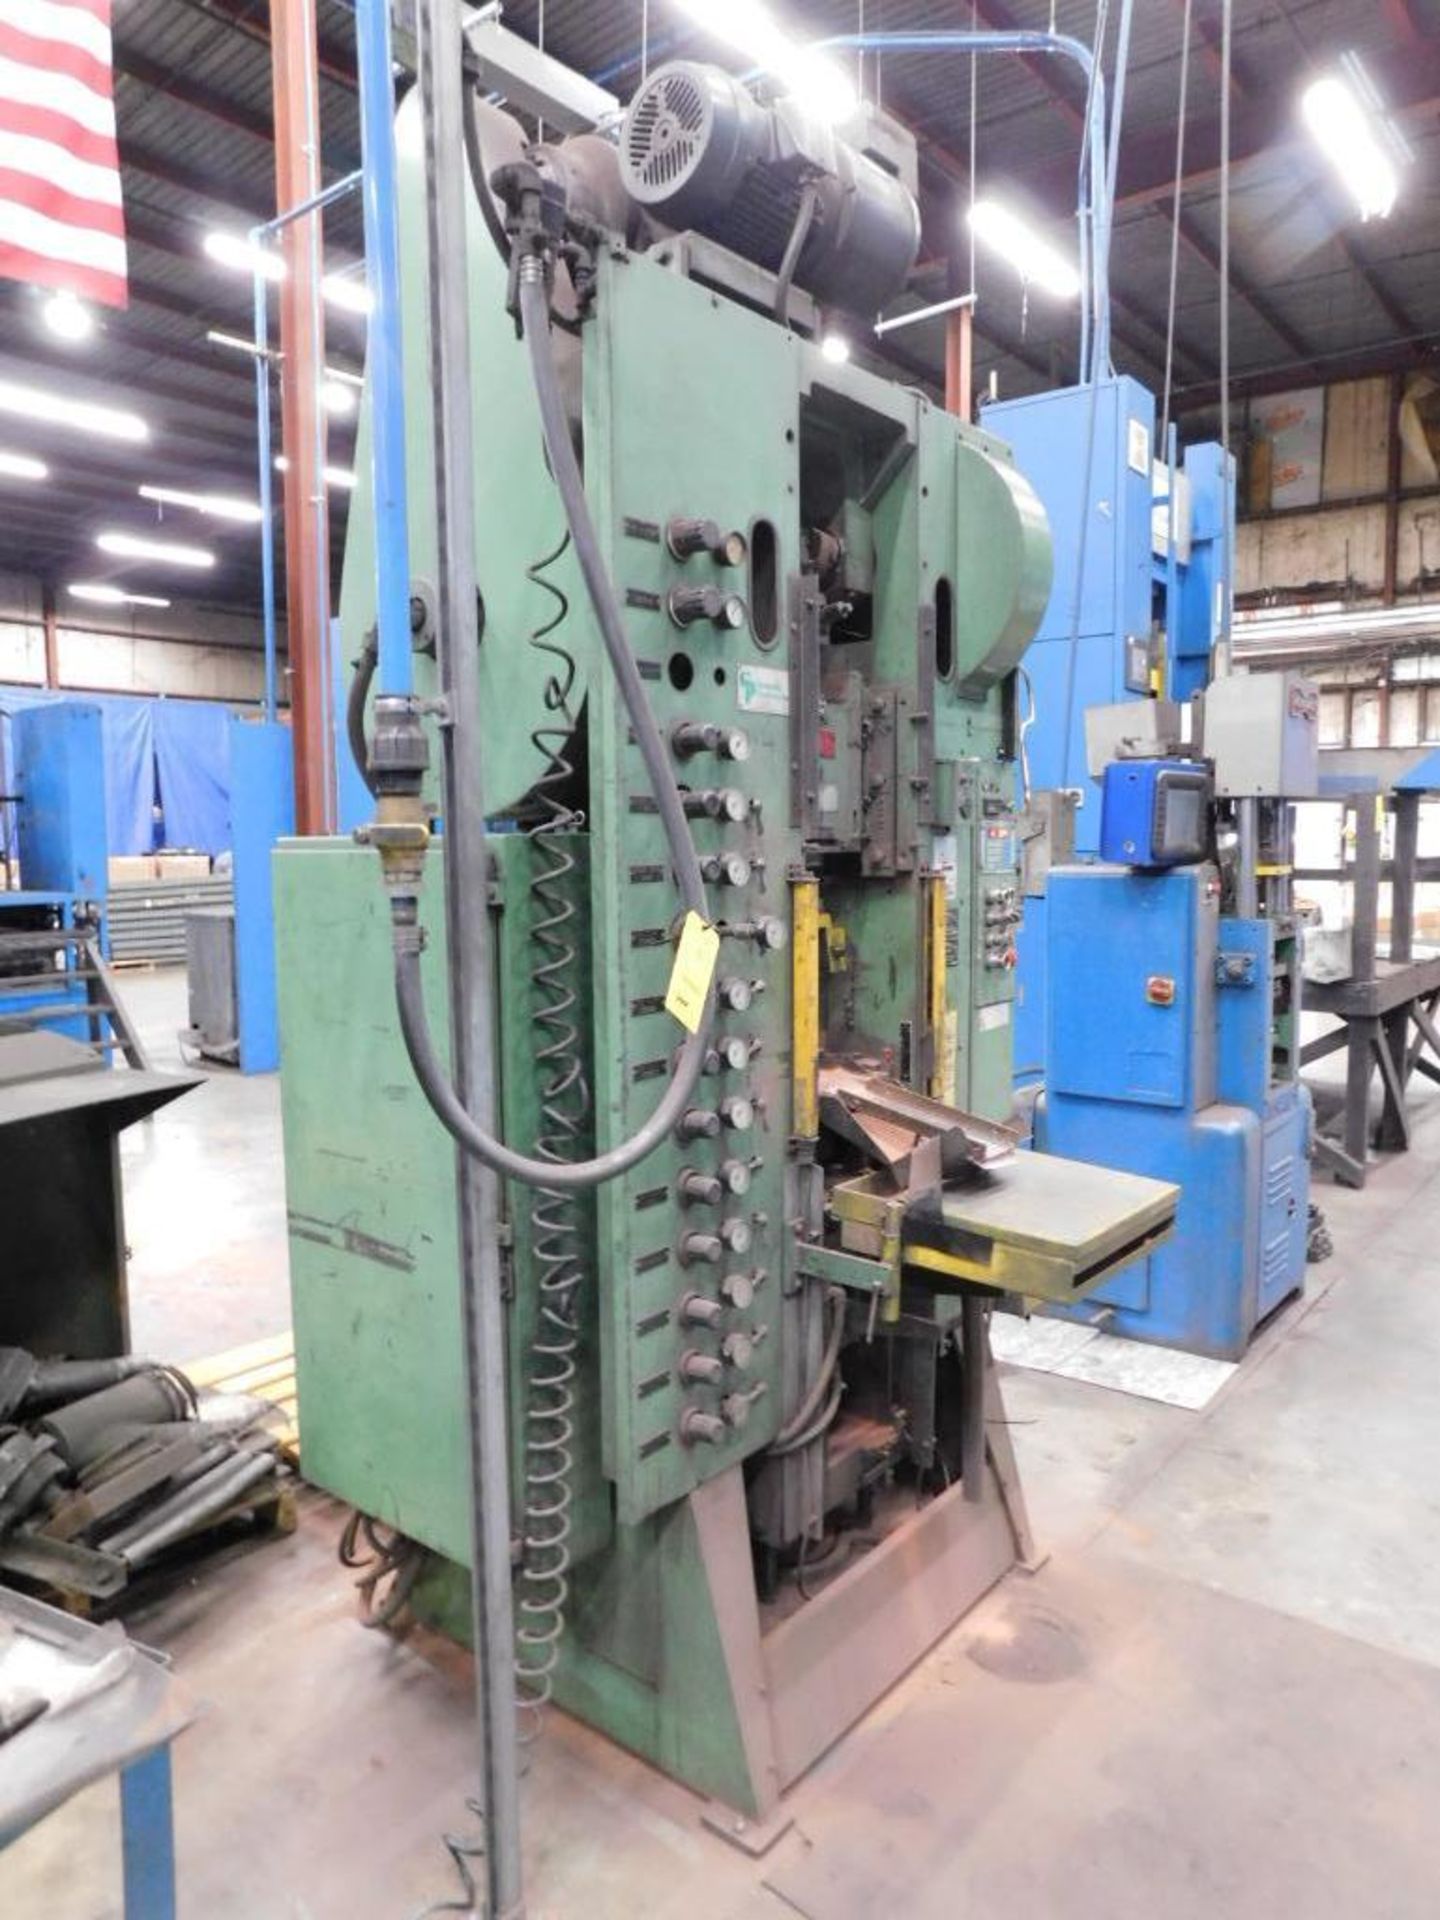 Gasbarre Powder Compacting Press, Mechanical, Model 30 Standard, S/N: 86256, 30 Ton Maximum Pressing - Image 5 of 22